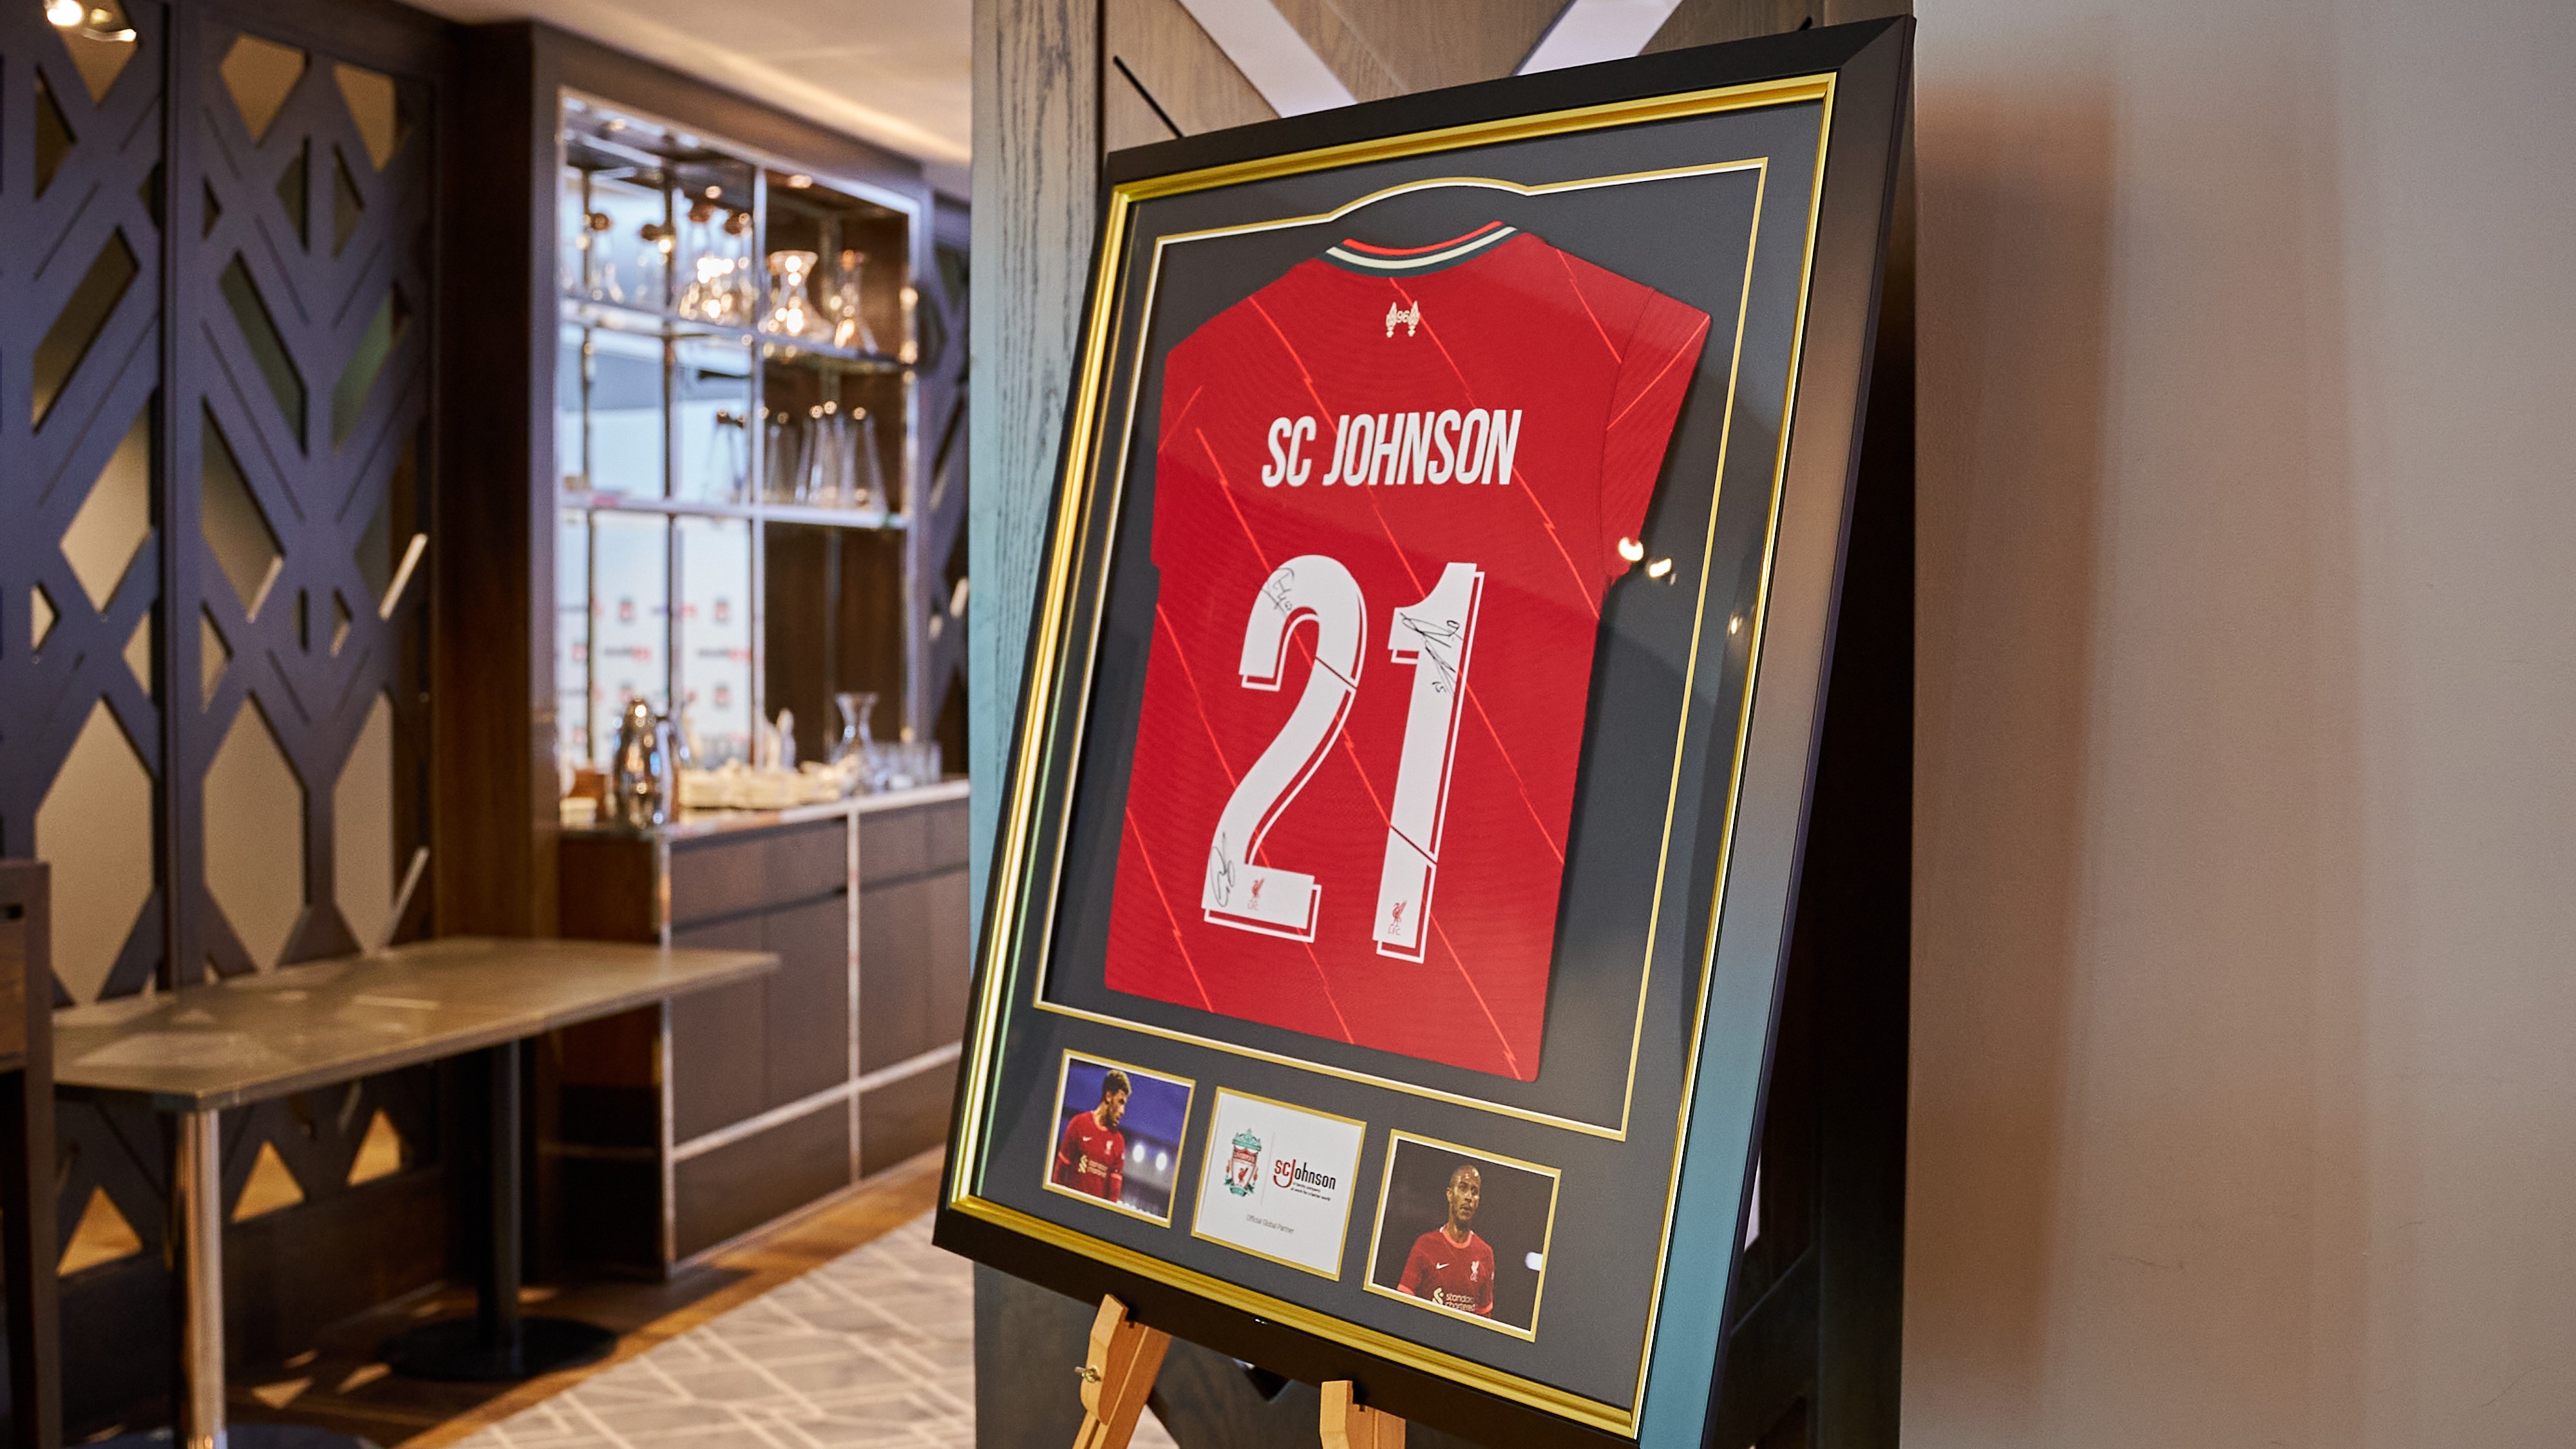 SC Johnson Liverpool Jersey Displayed